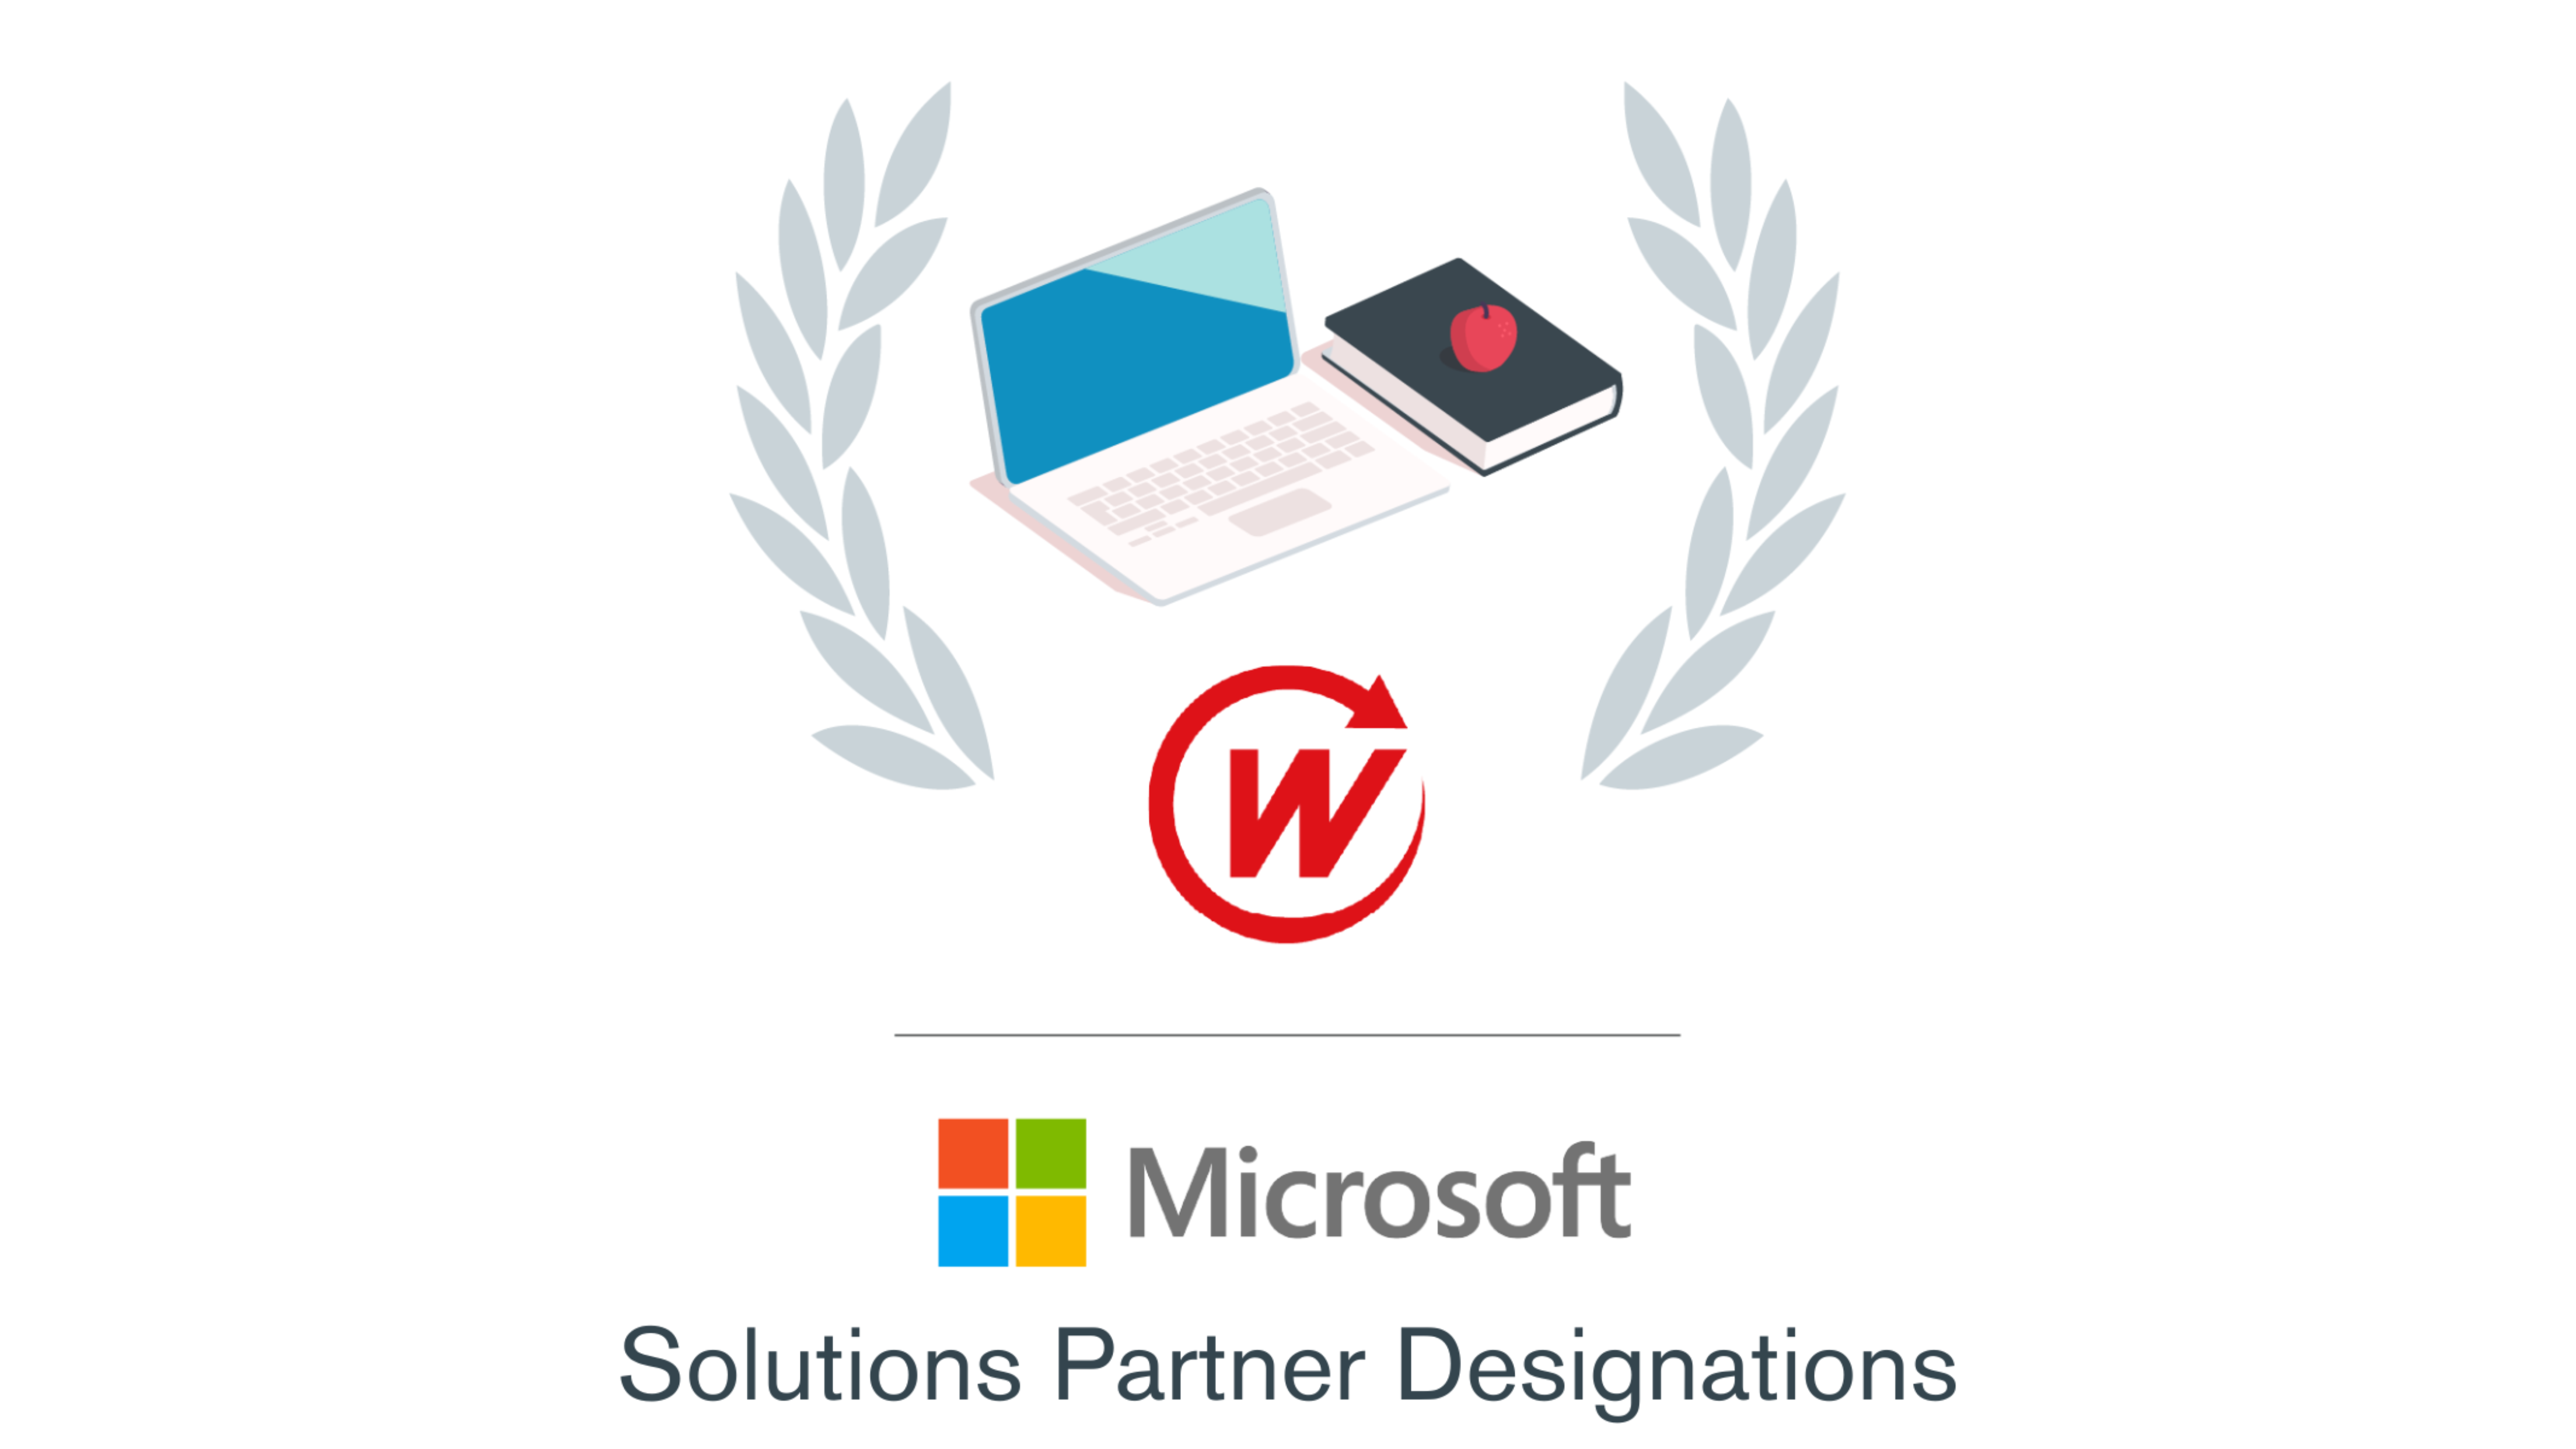 Solutions Partner Designations